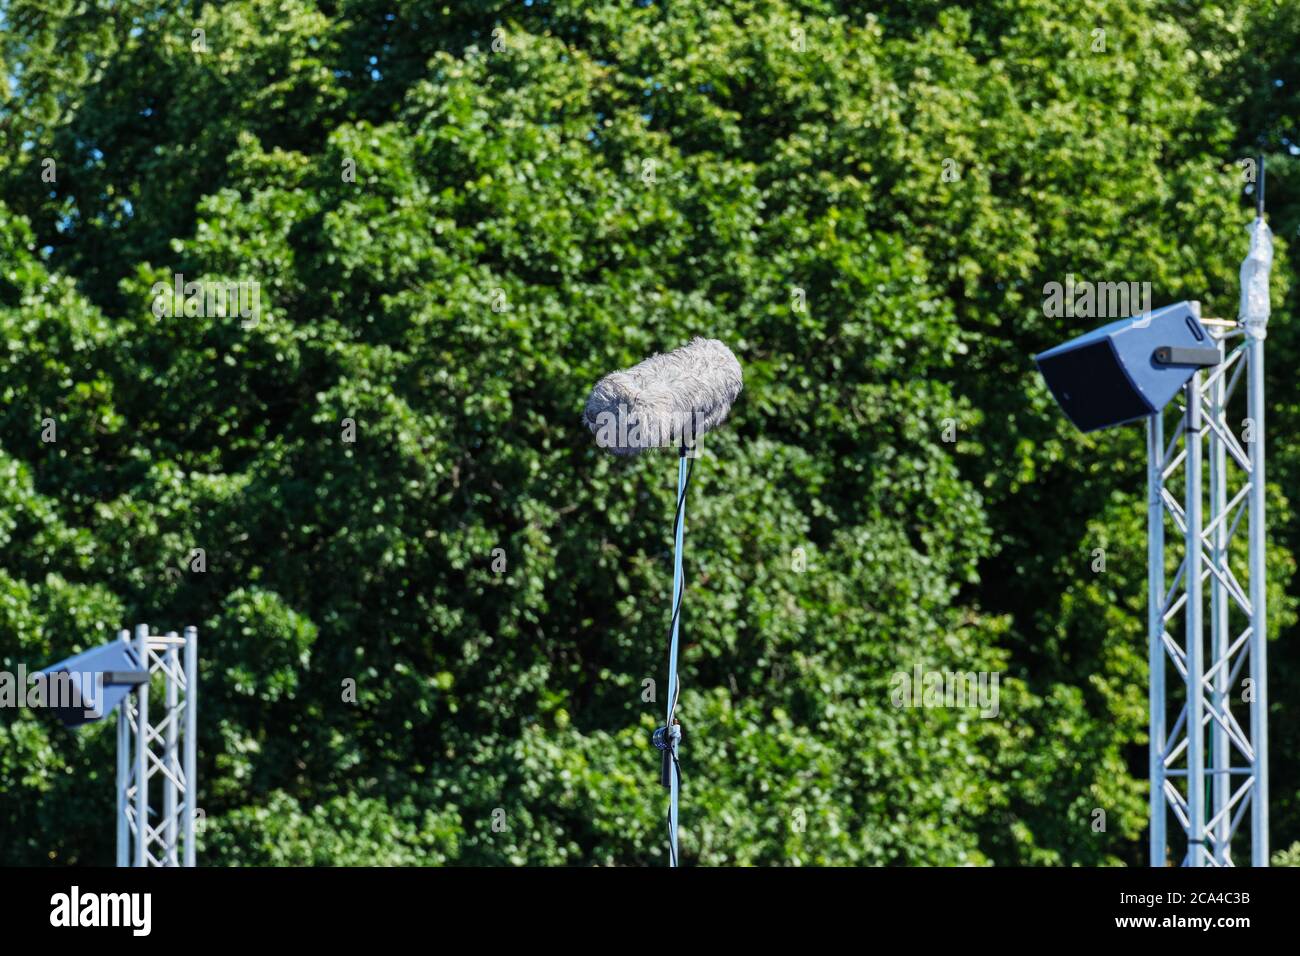 Professionelle winddichte Mikrofon mit grünen Bäumen Hintergrund Stockfoto